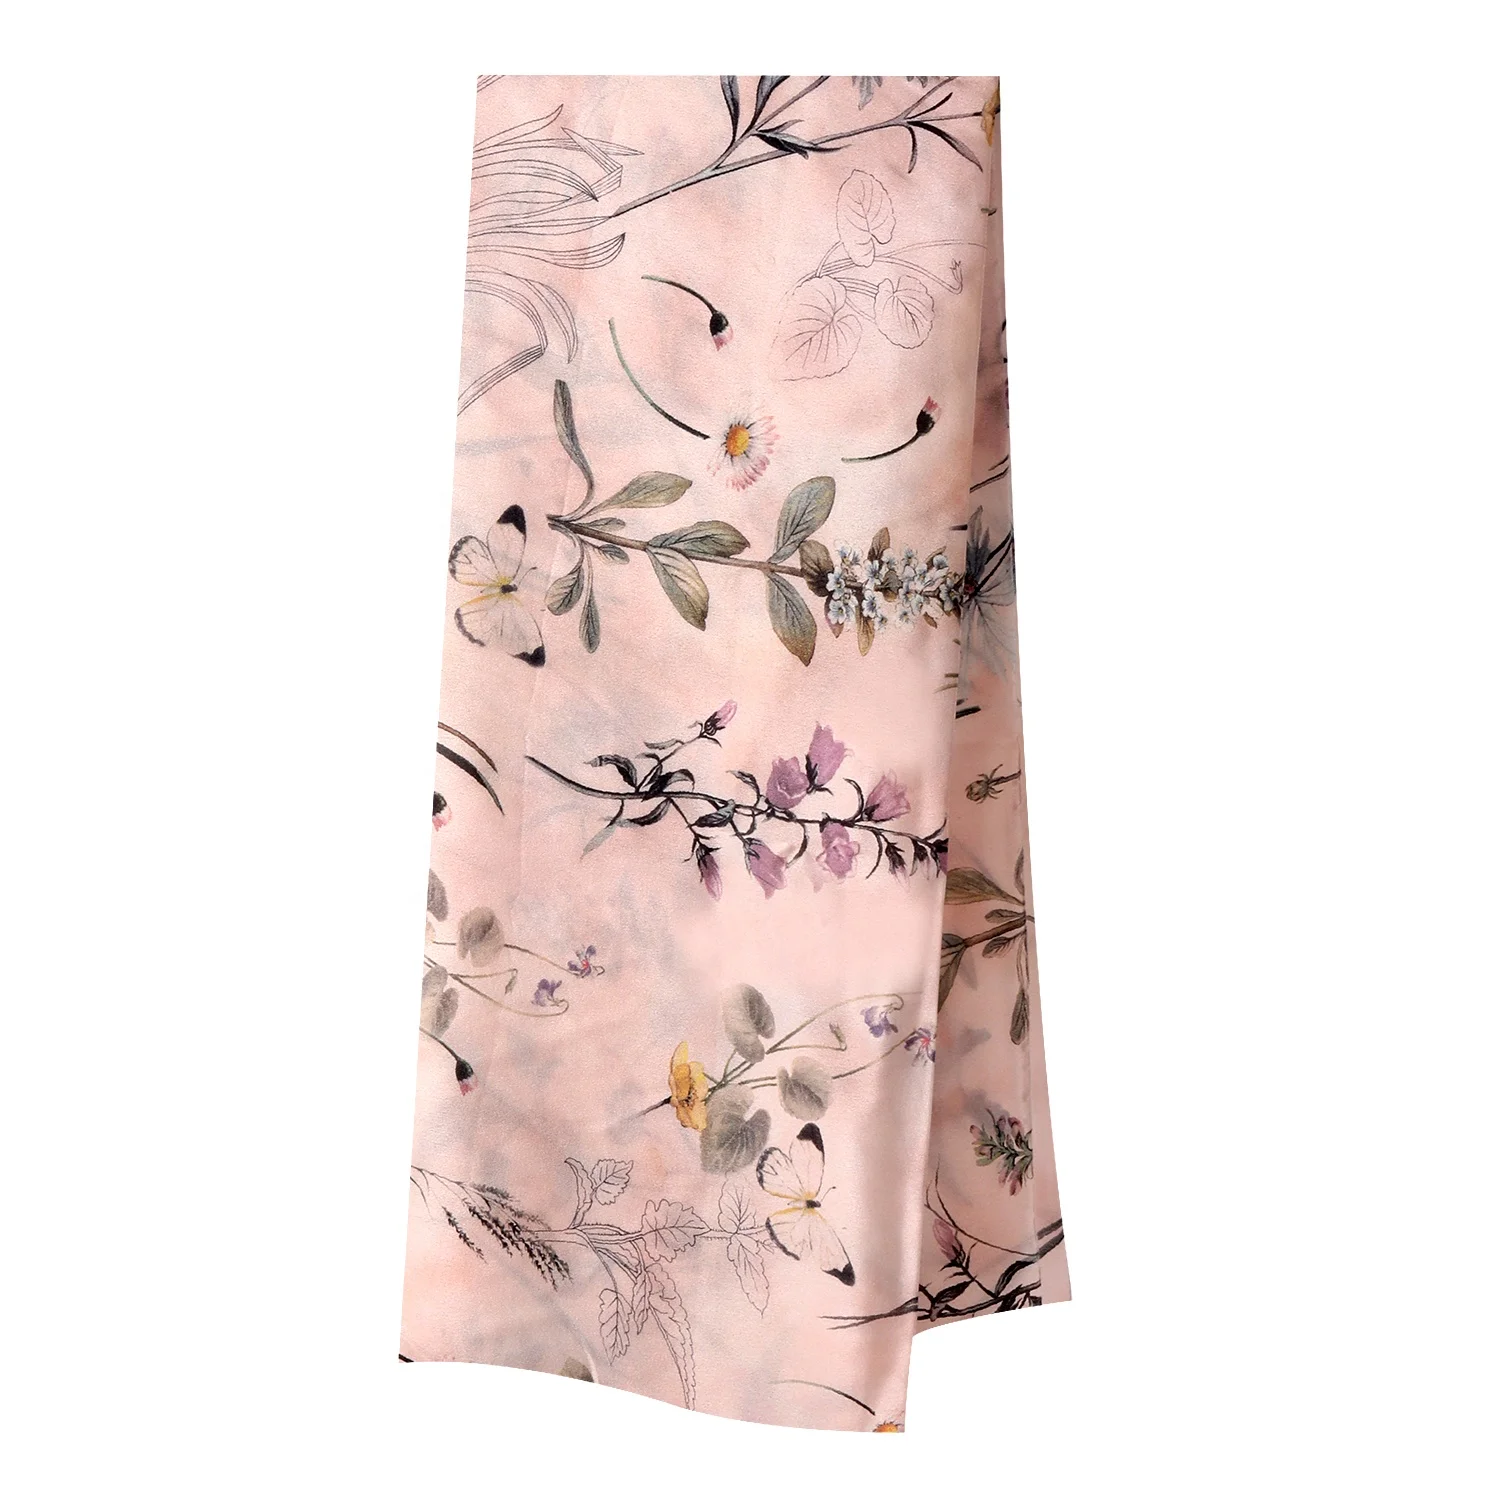 Hot sale digital print silk fabric 100% pure silk crepe de chine romantic style for girl’s tops dressing